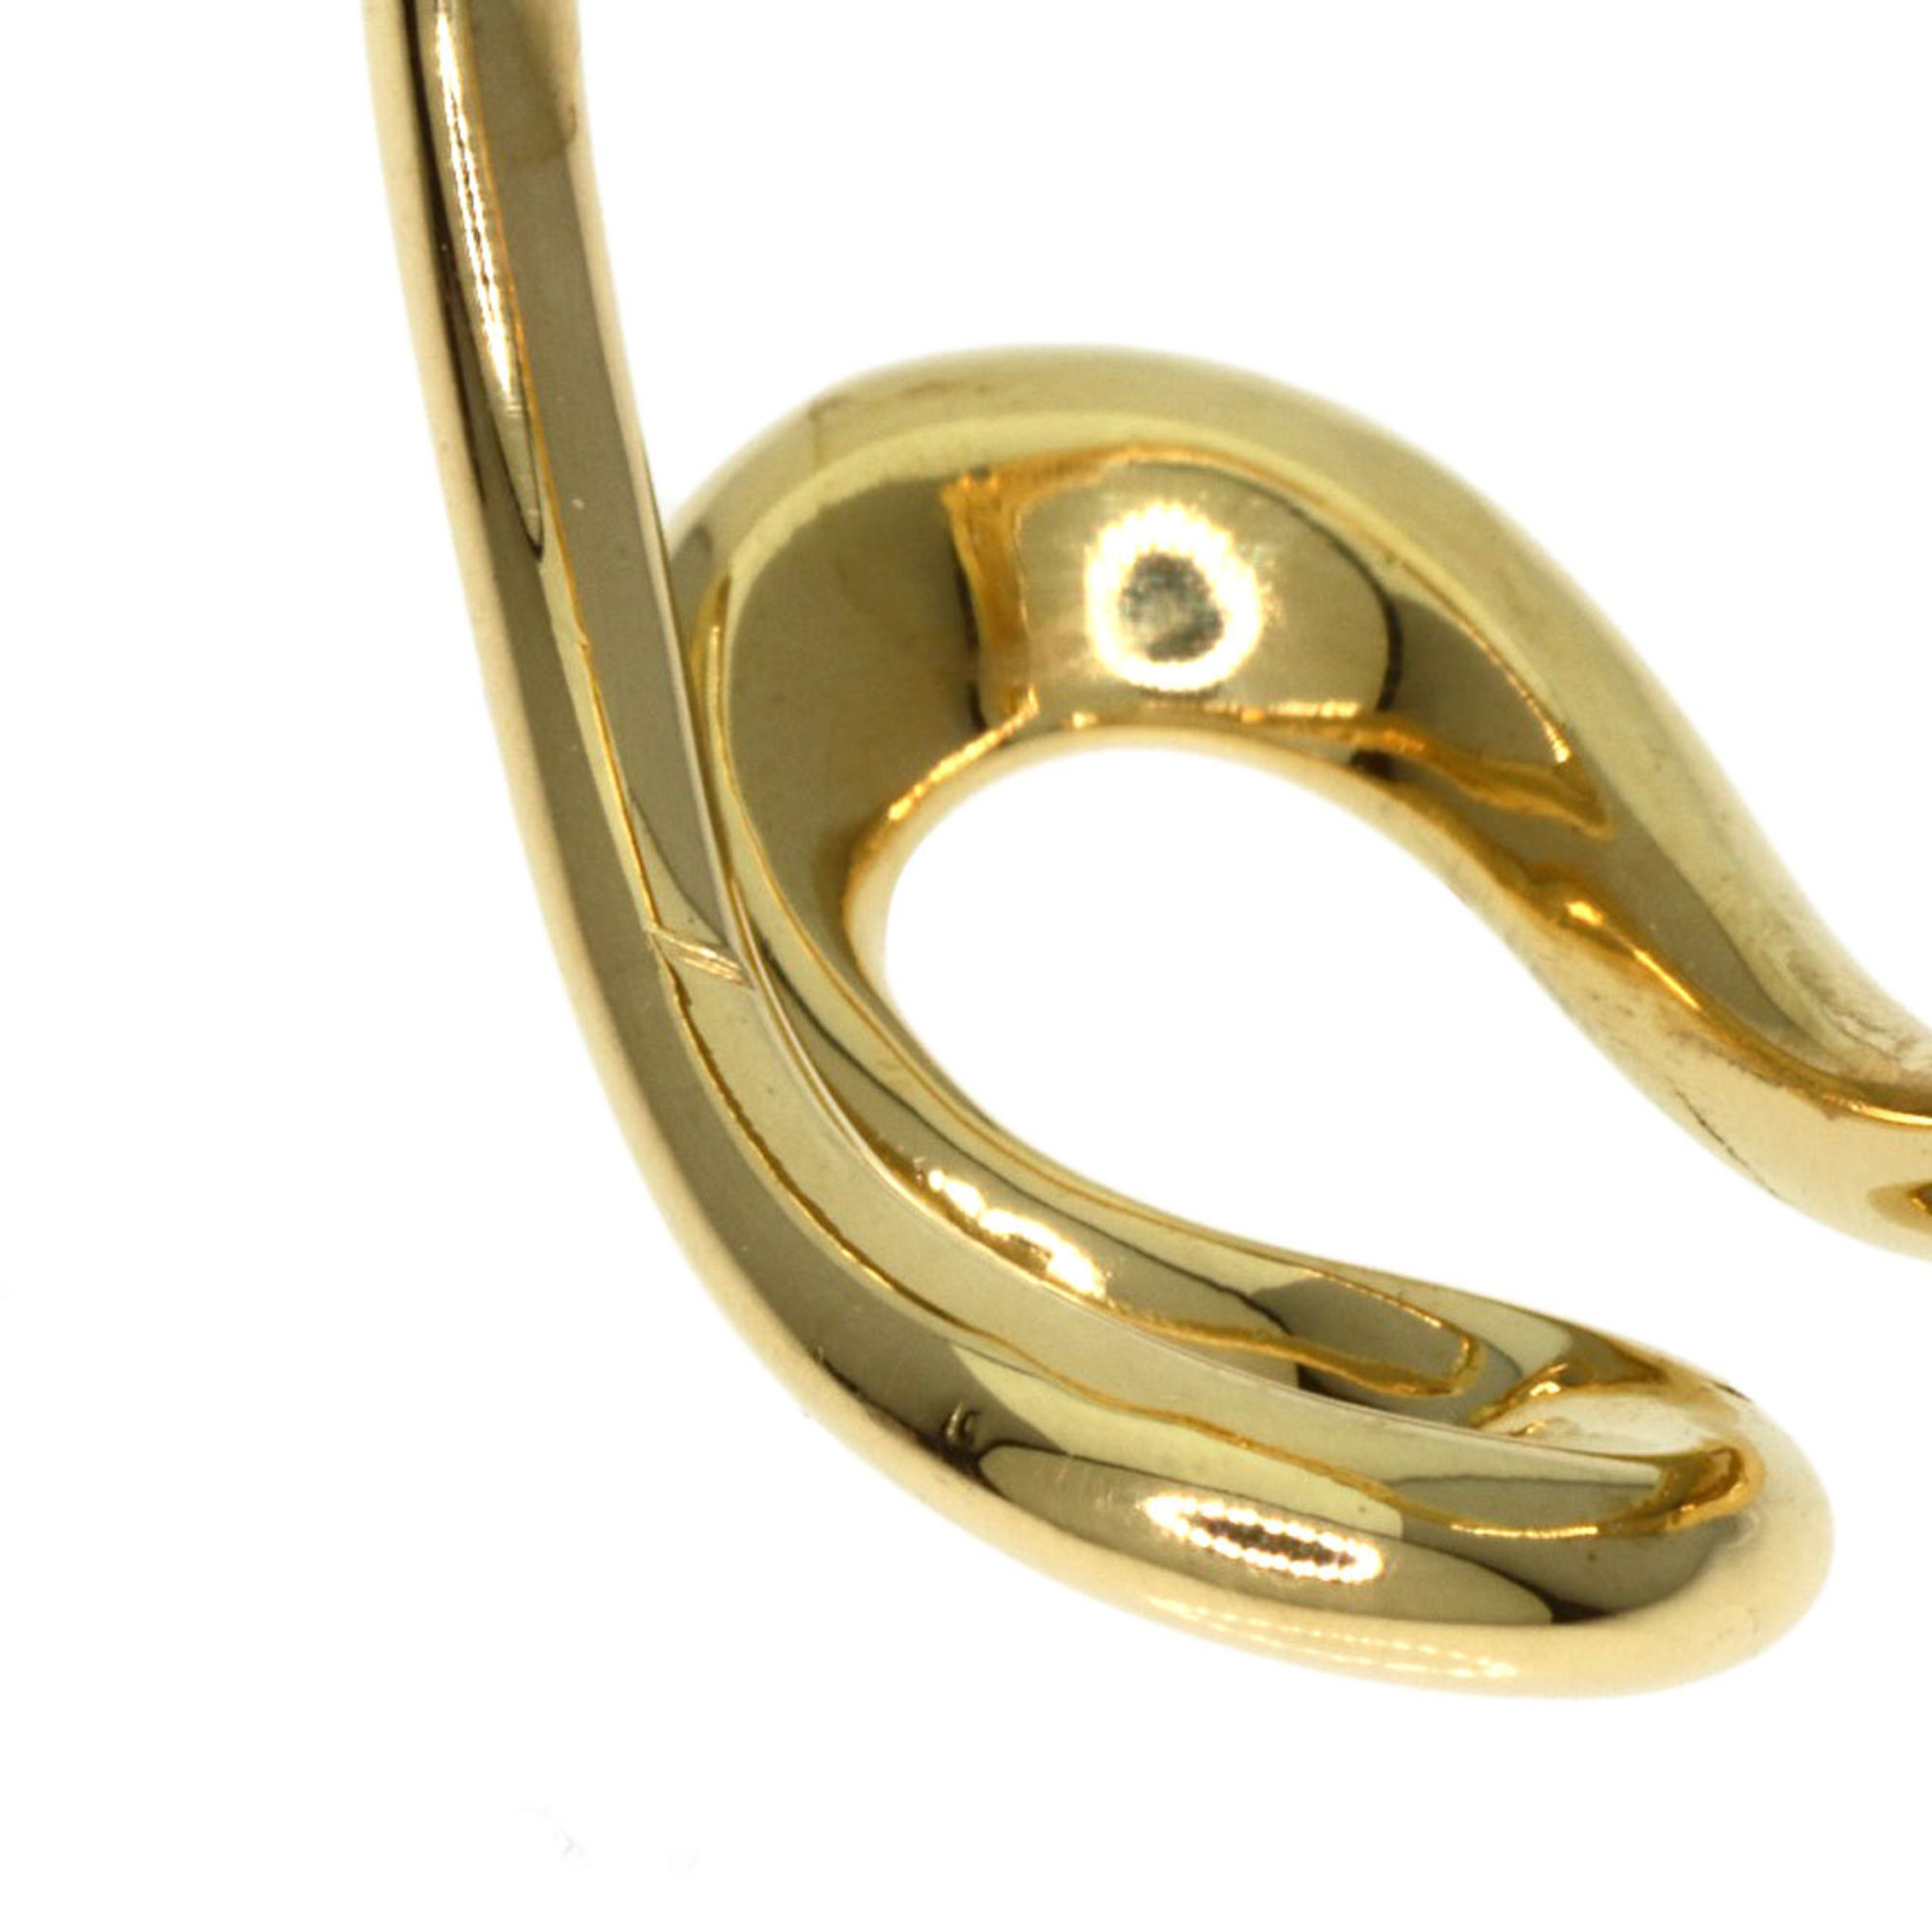 Tiffany Wave Ring, 18K Yellow Gold, Women's, TIFFANY&Co.